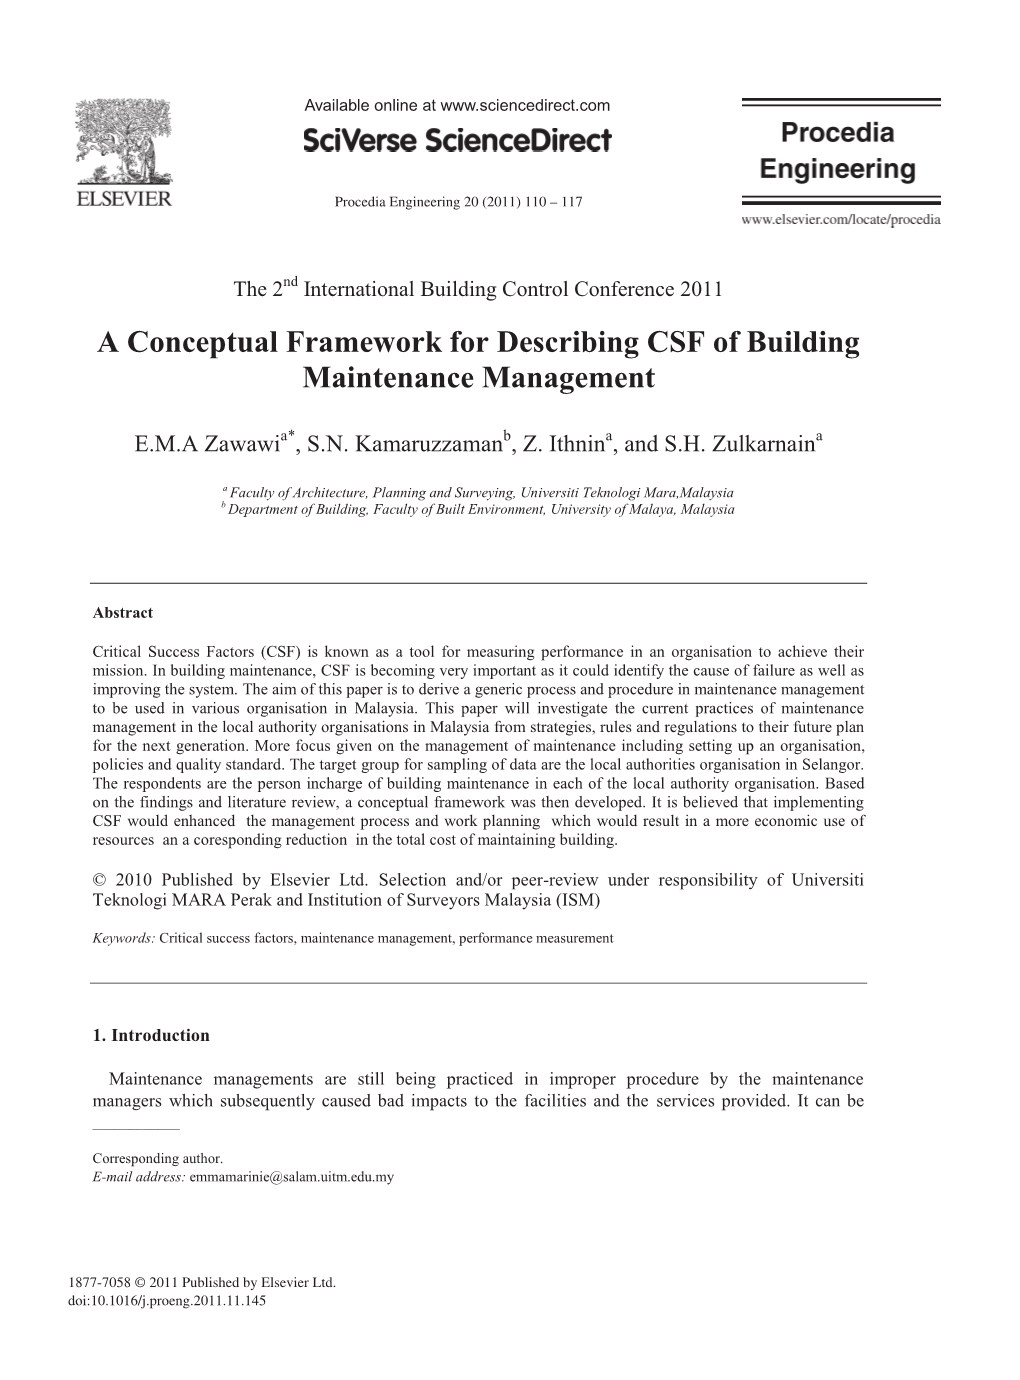 A Conceptual Framework for Describing CSF of Building Maintenance Management